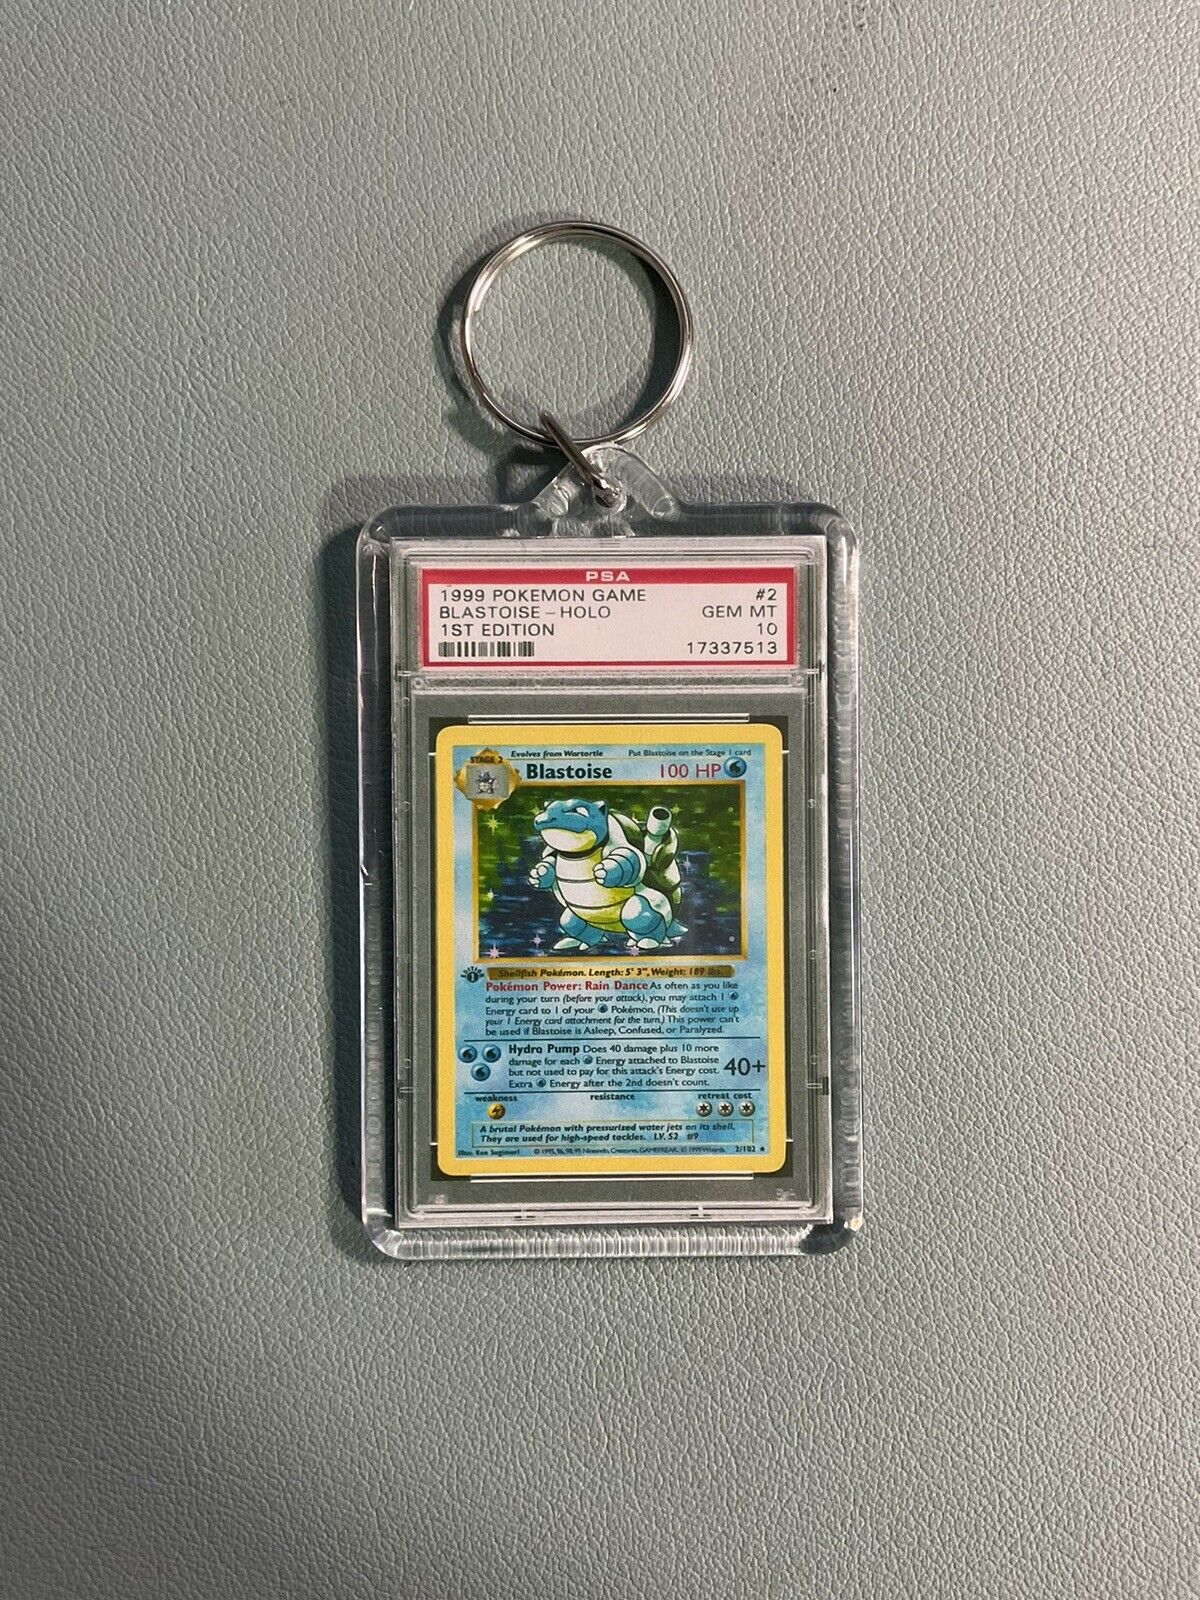 Blastoise - 1999 Holo - PSA Homage - Mini Slab - Pokemon Keychain